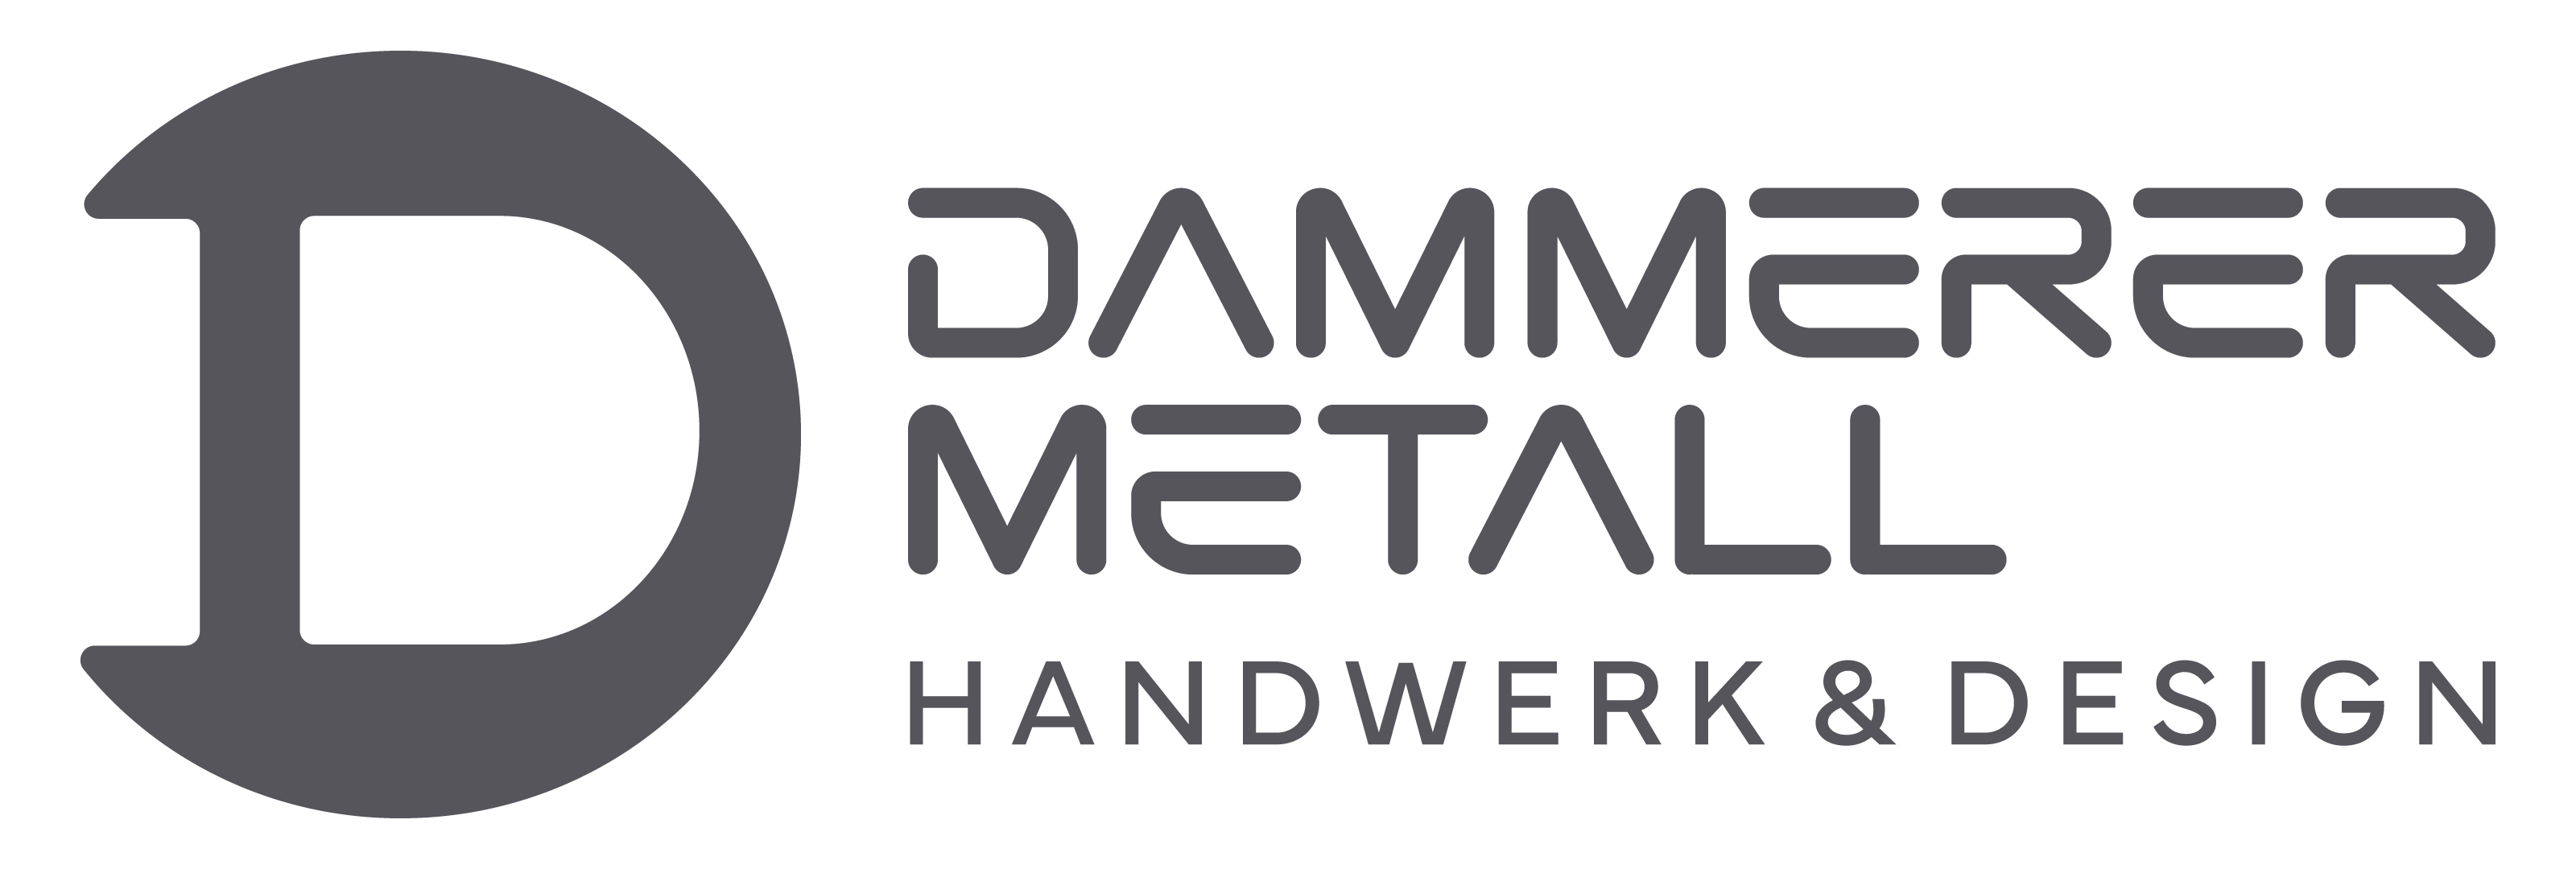 Dammerer-Metall Metallbautechnik/ Schlosser/ Metallmanufaktur Logo+Schriftzug grau